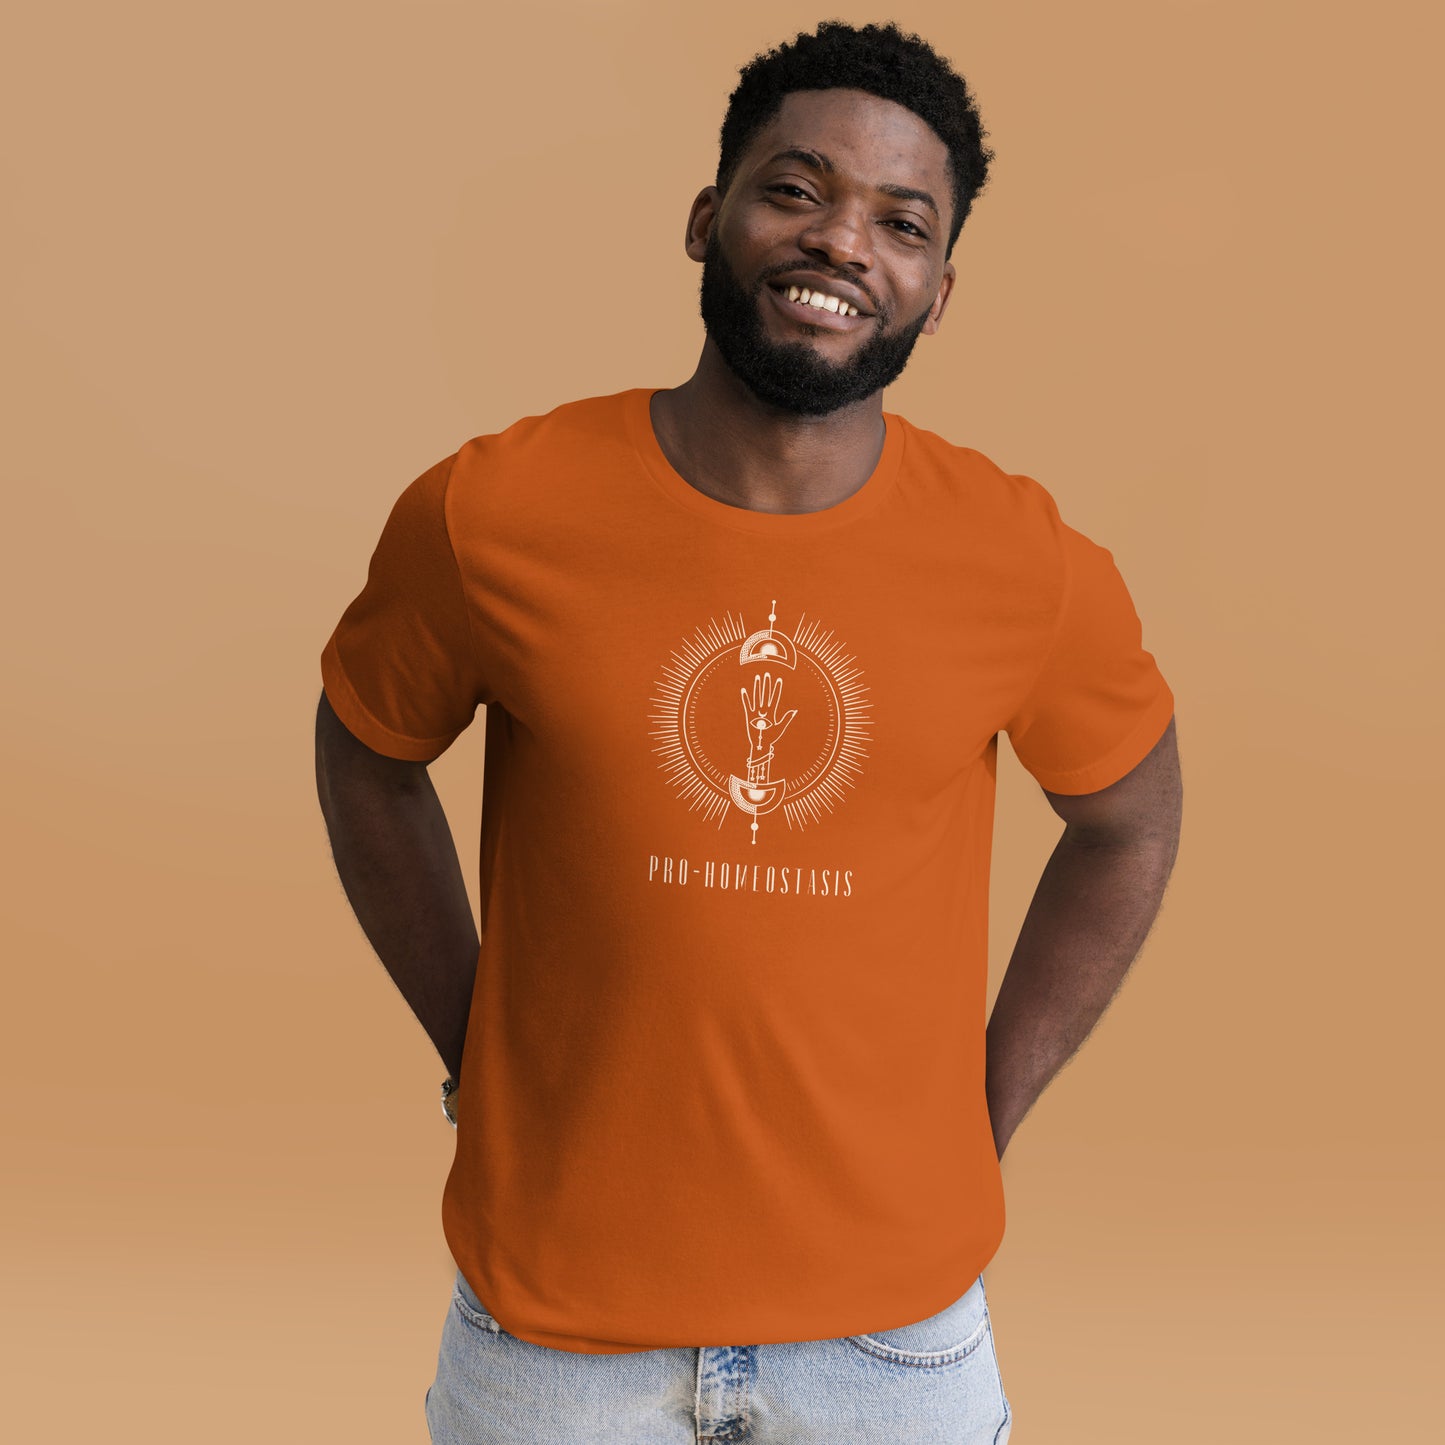 Pro-Homeostasis - Unisex T-shirt